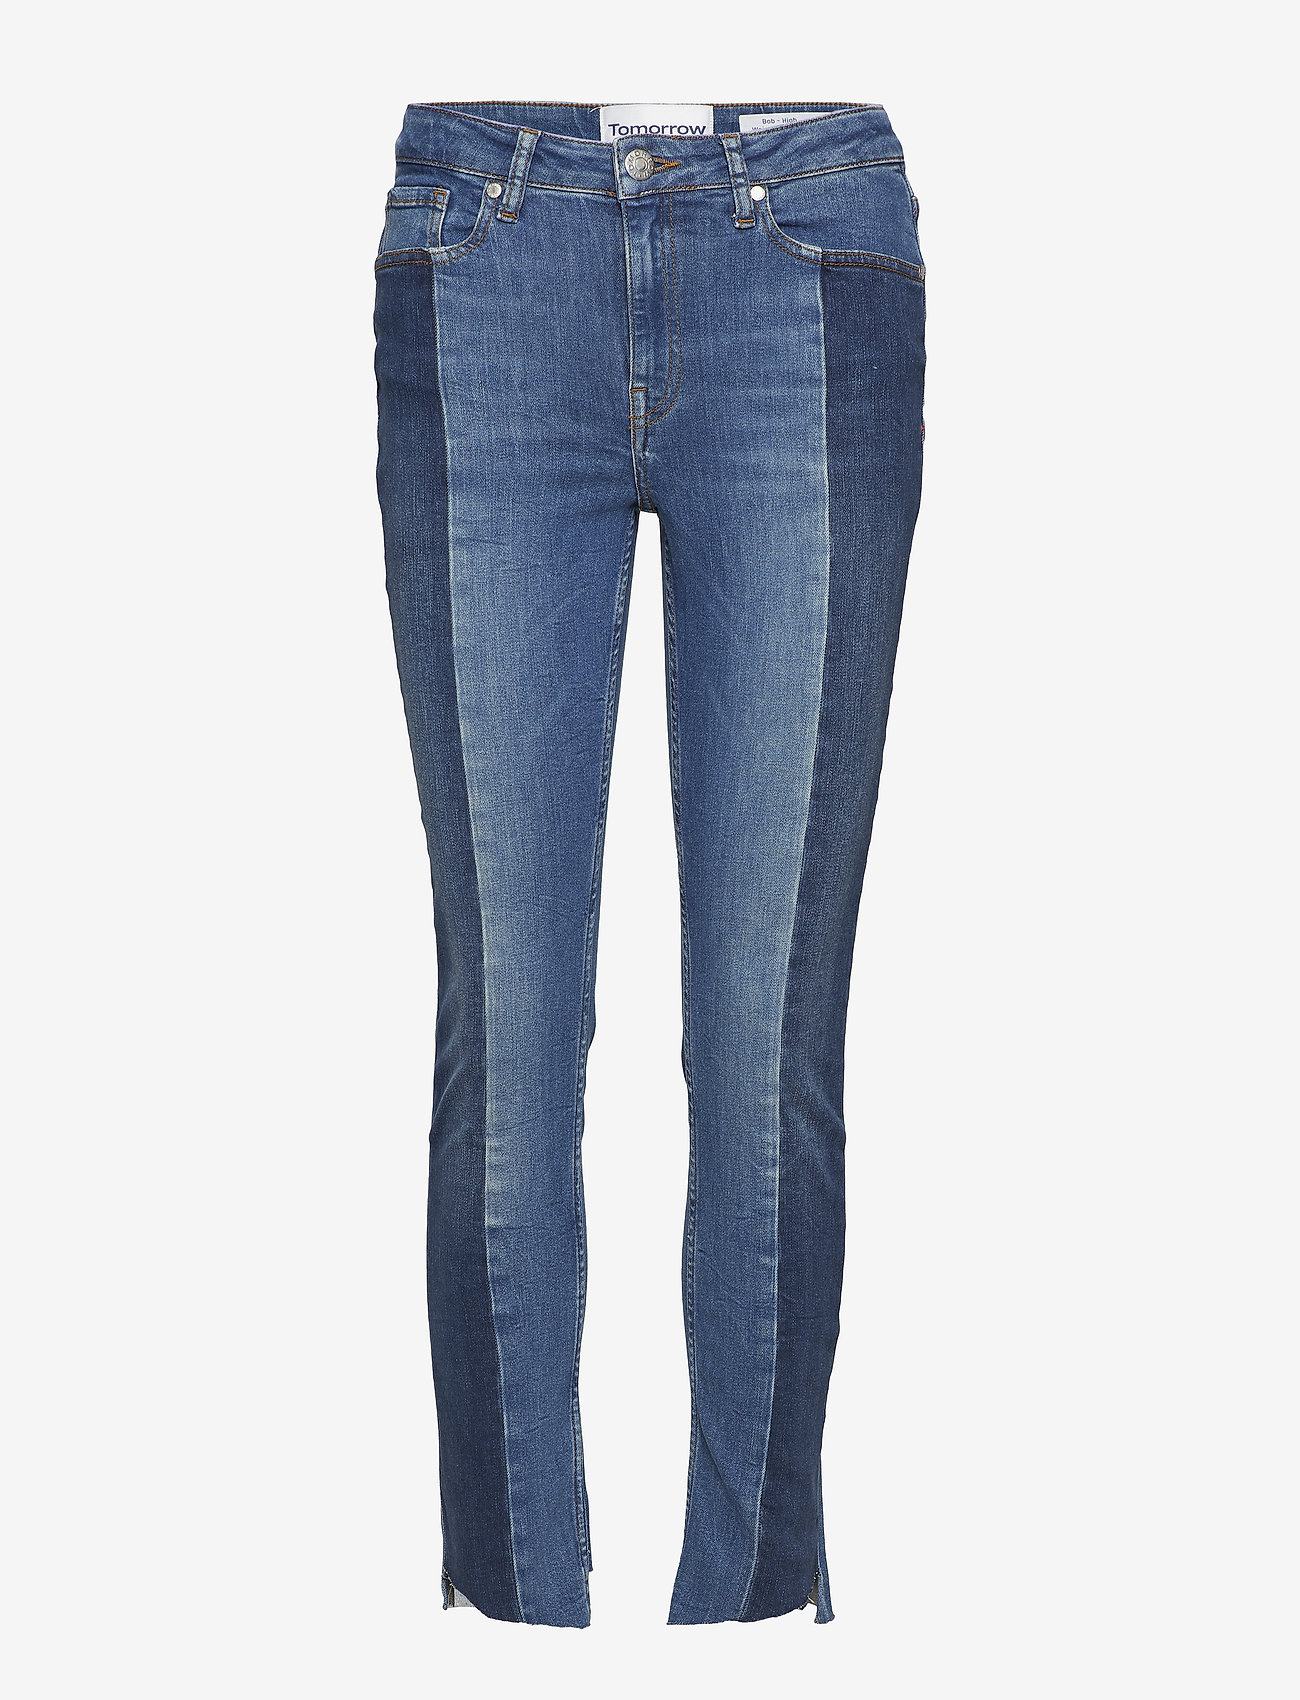 Tomorrow - Bob cropped jeans wash Brighton - siaurėjantys džinsai - 51 denim blue - 0